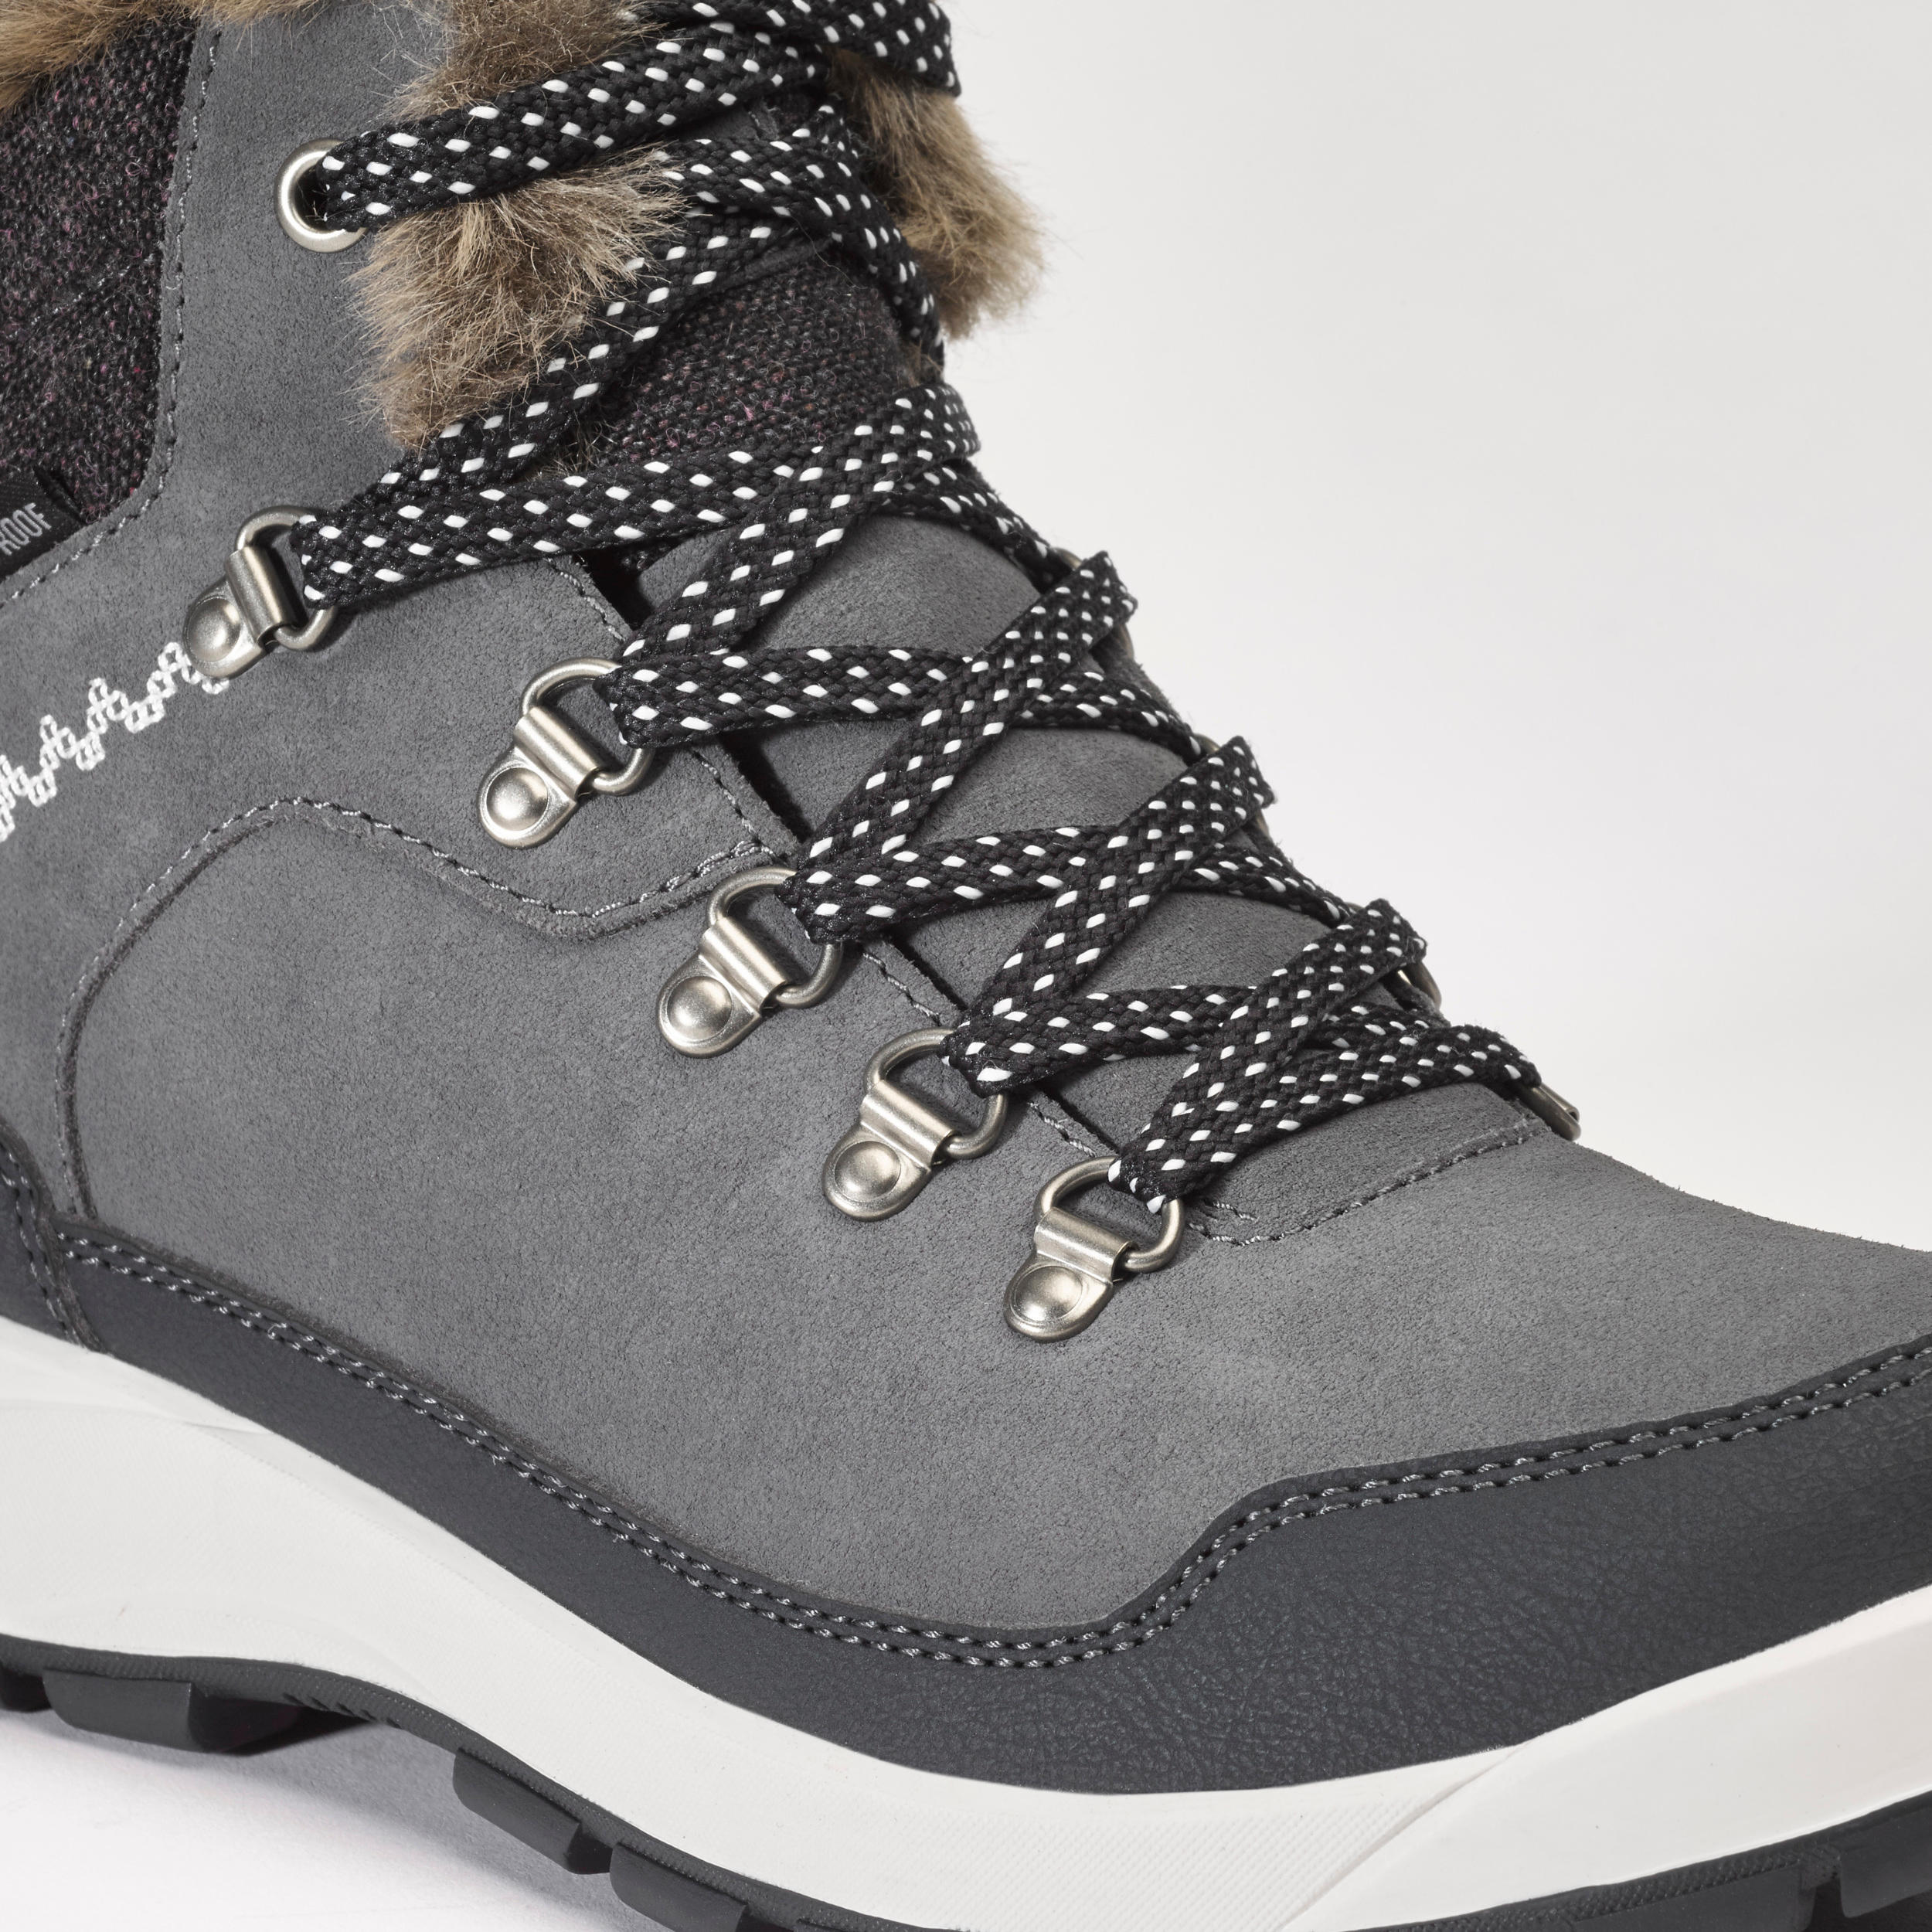 Women’s leather warm waterproof snow boots - SH900 Mid 5/7